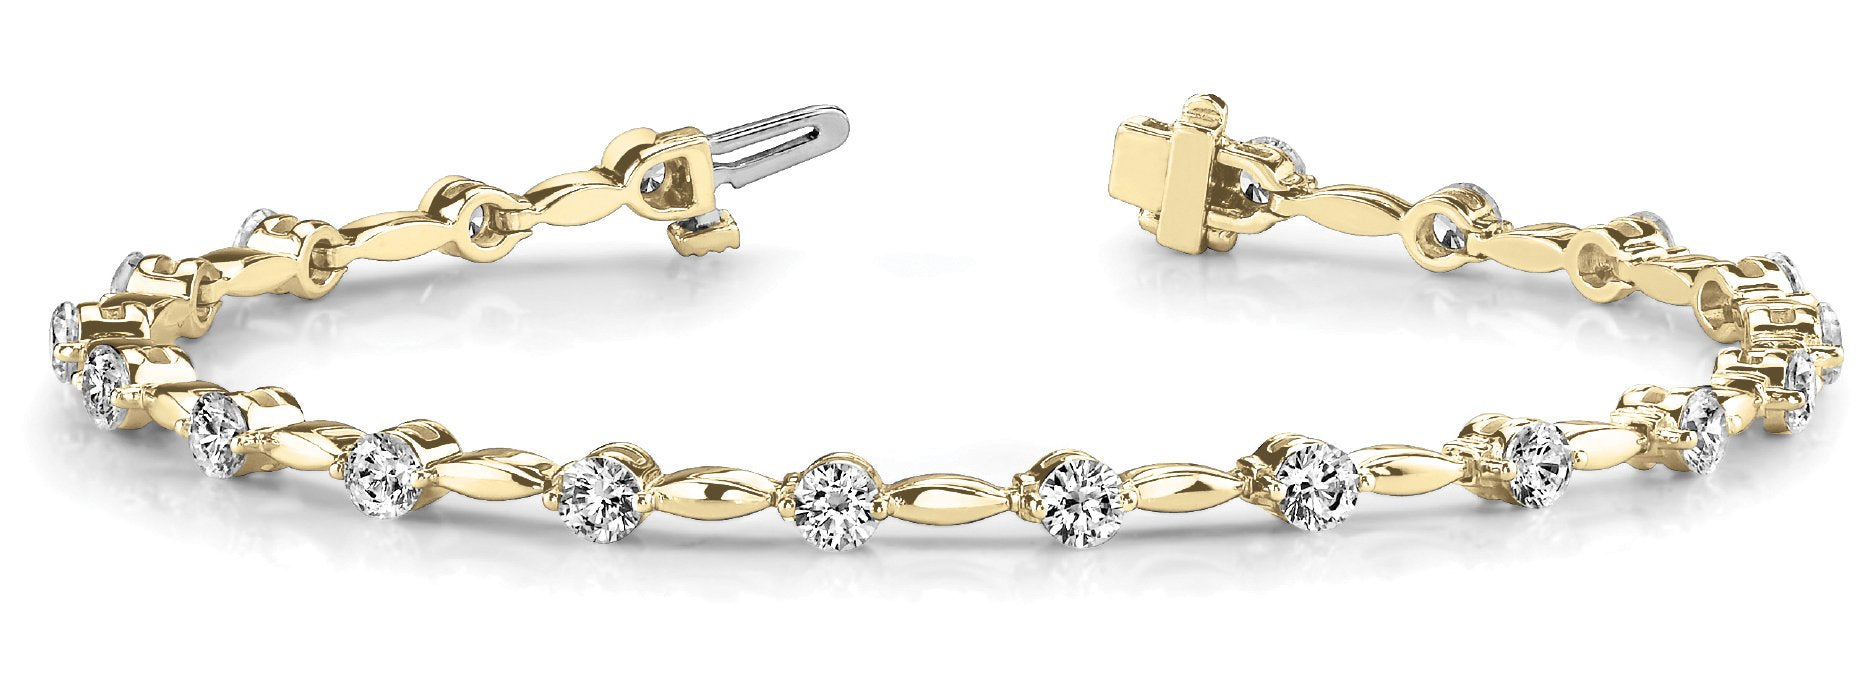 Fancy Diamond Bracelet Ladies 2.71ct tw - 14kt Yellow Gold